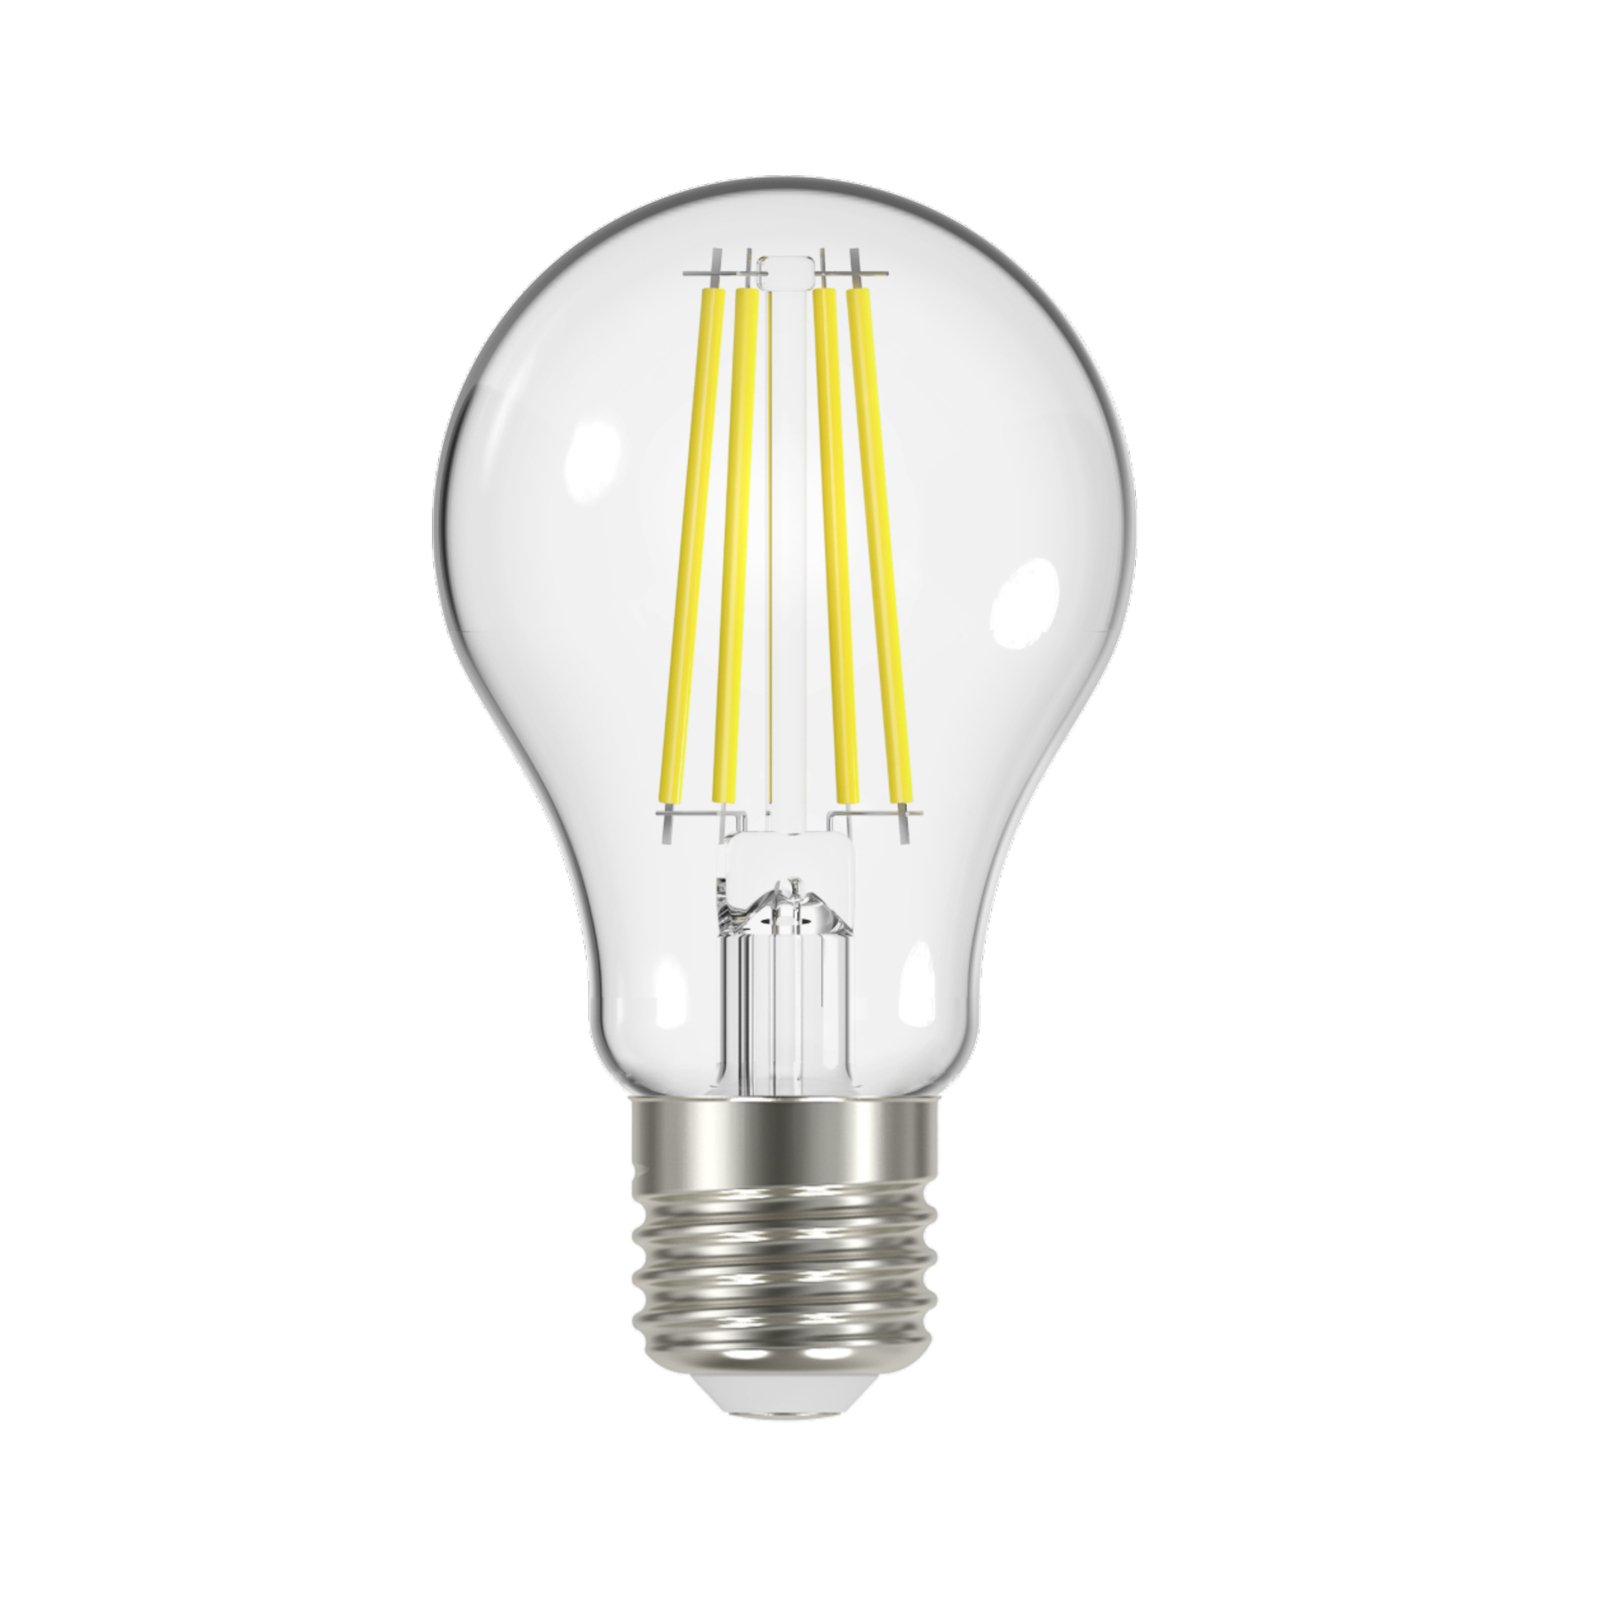 Filament LED bulb E27 5W 2,700 K, 1060 lumens, clear